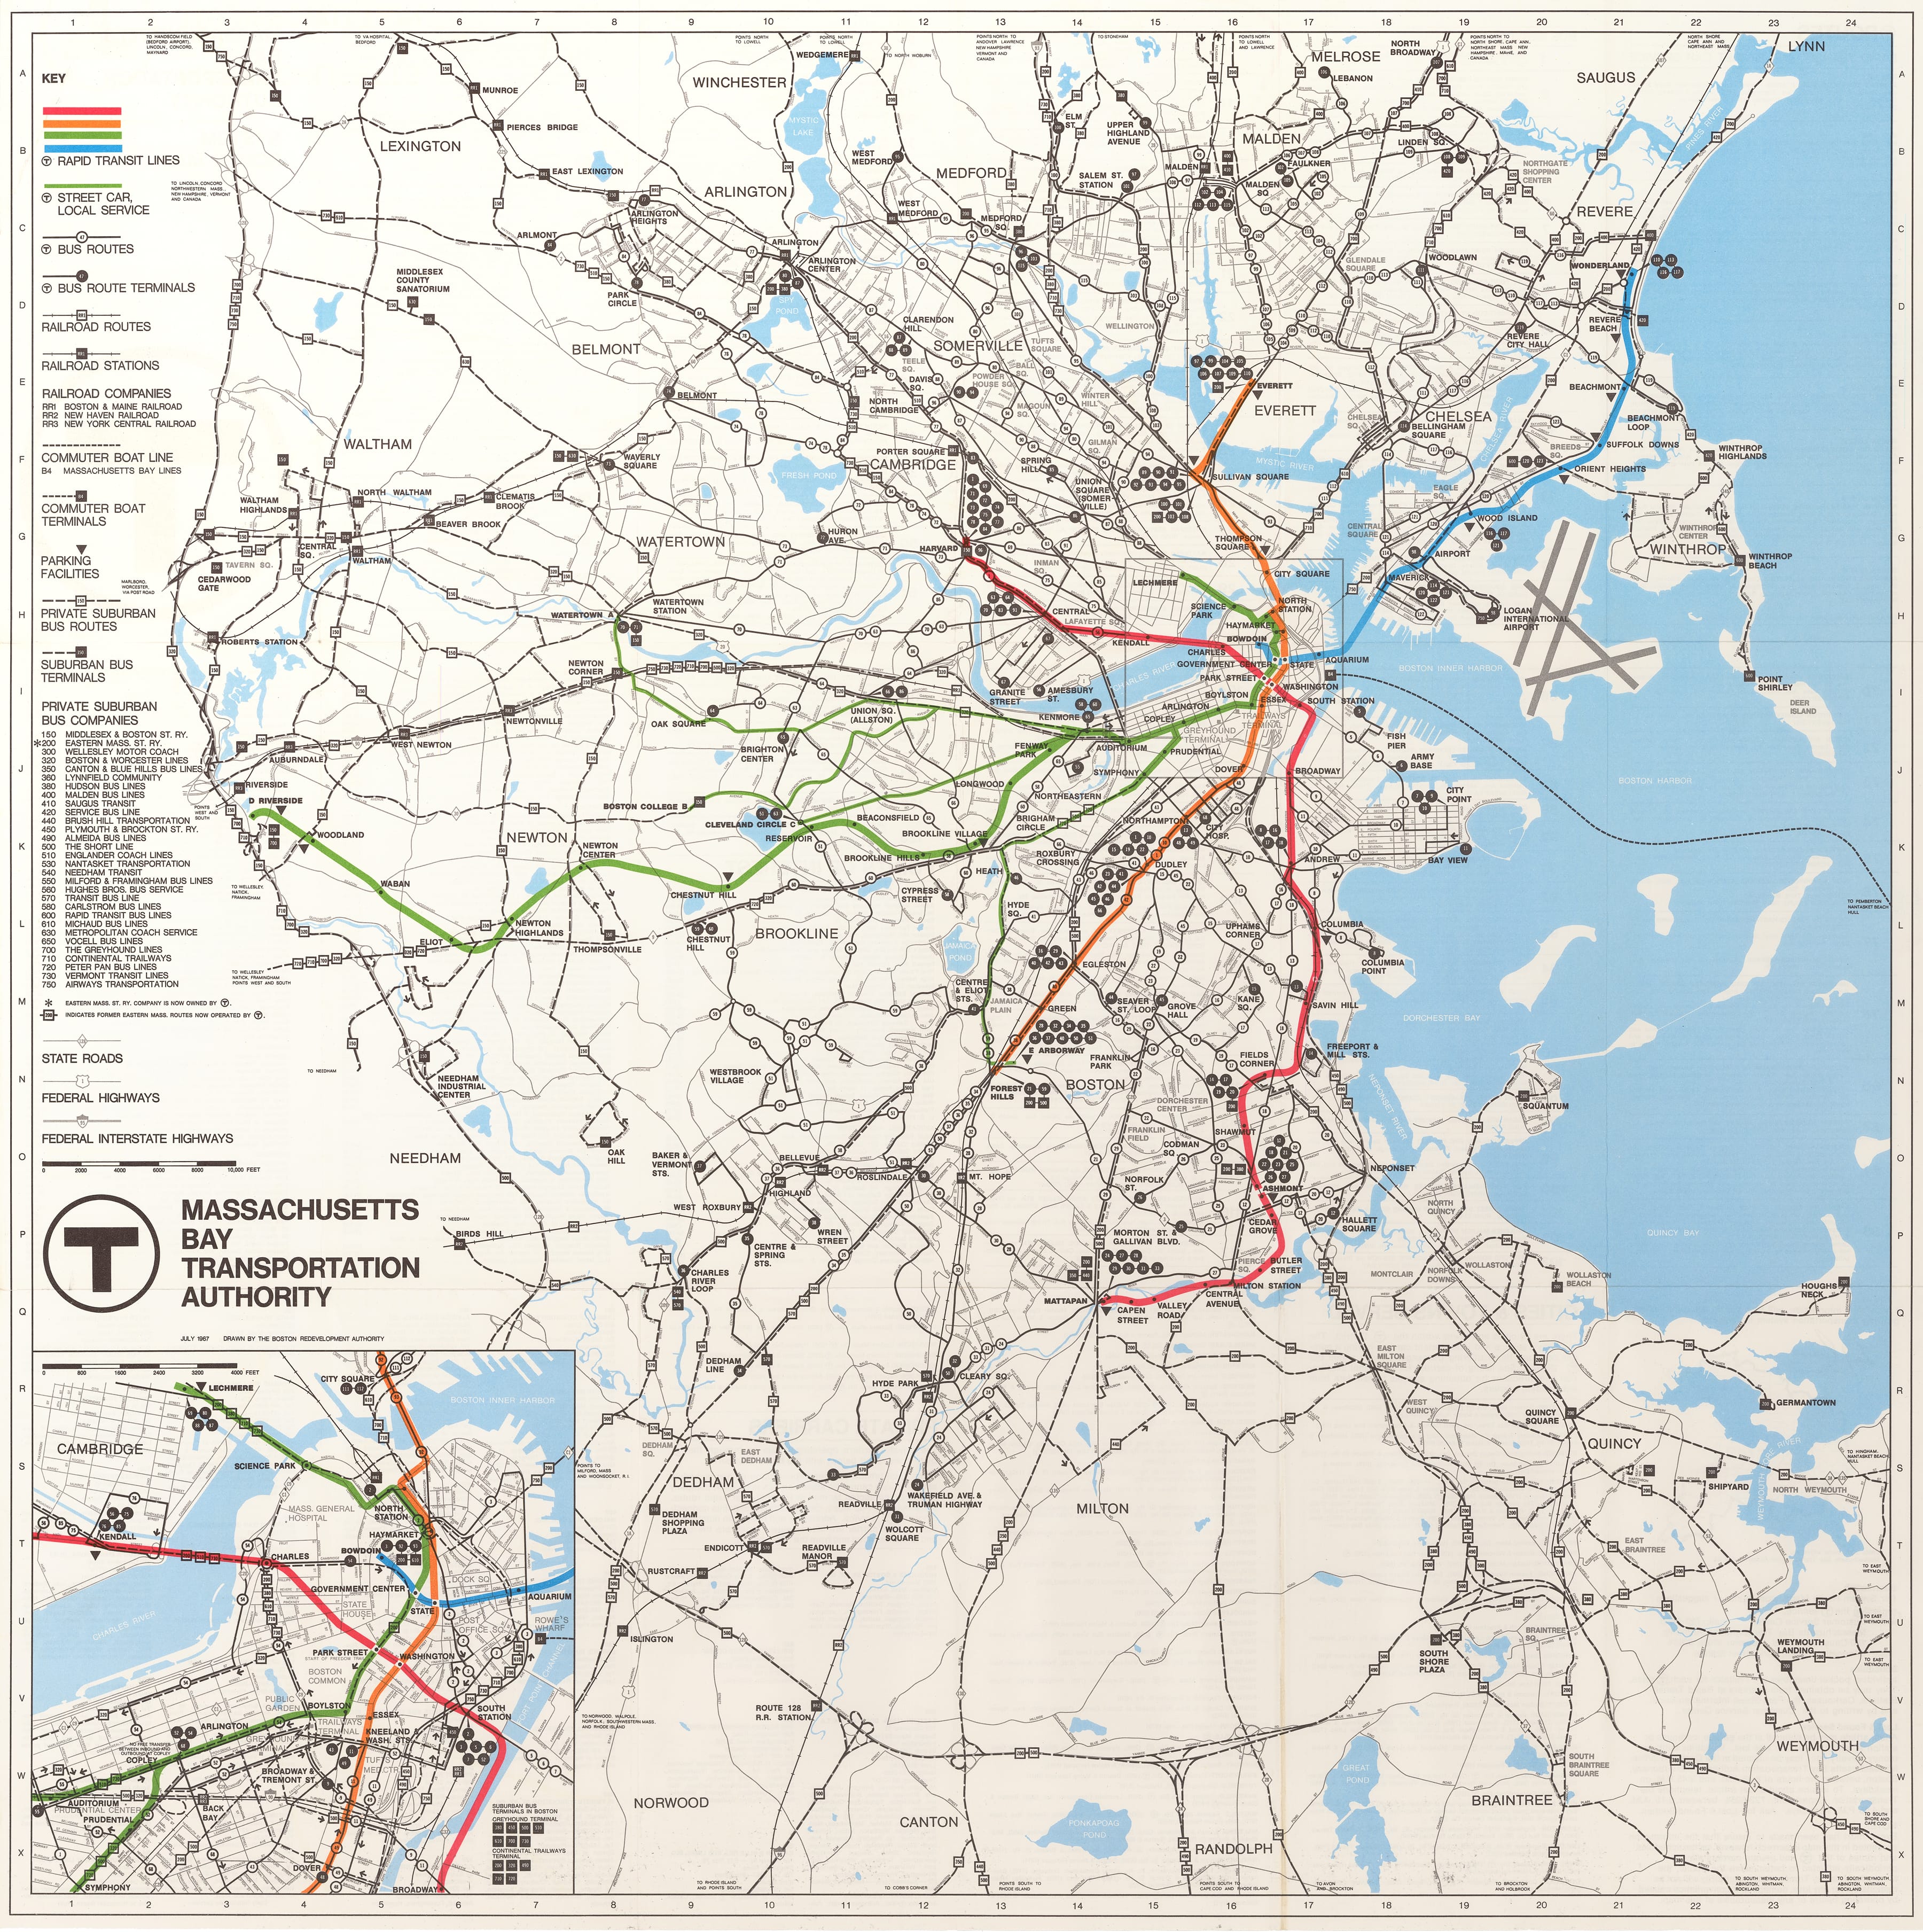 1967 Massachusetts Bay Transportation Authority map showing the full transportation system